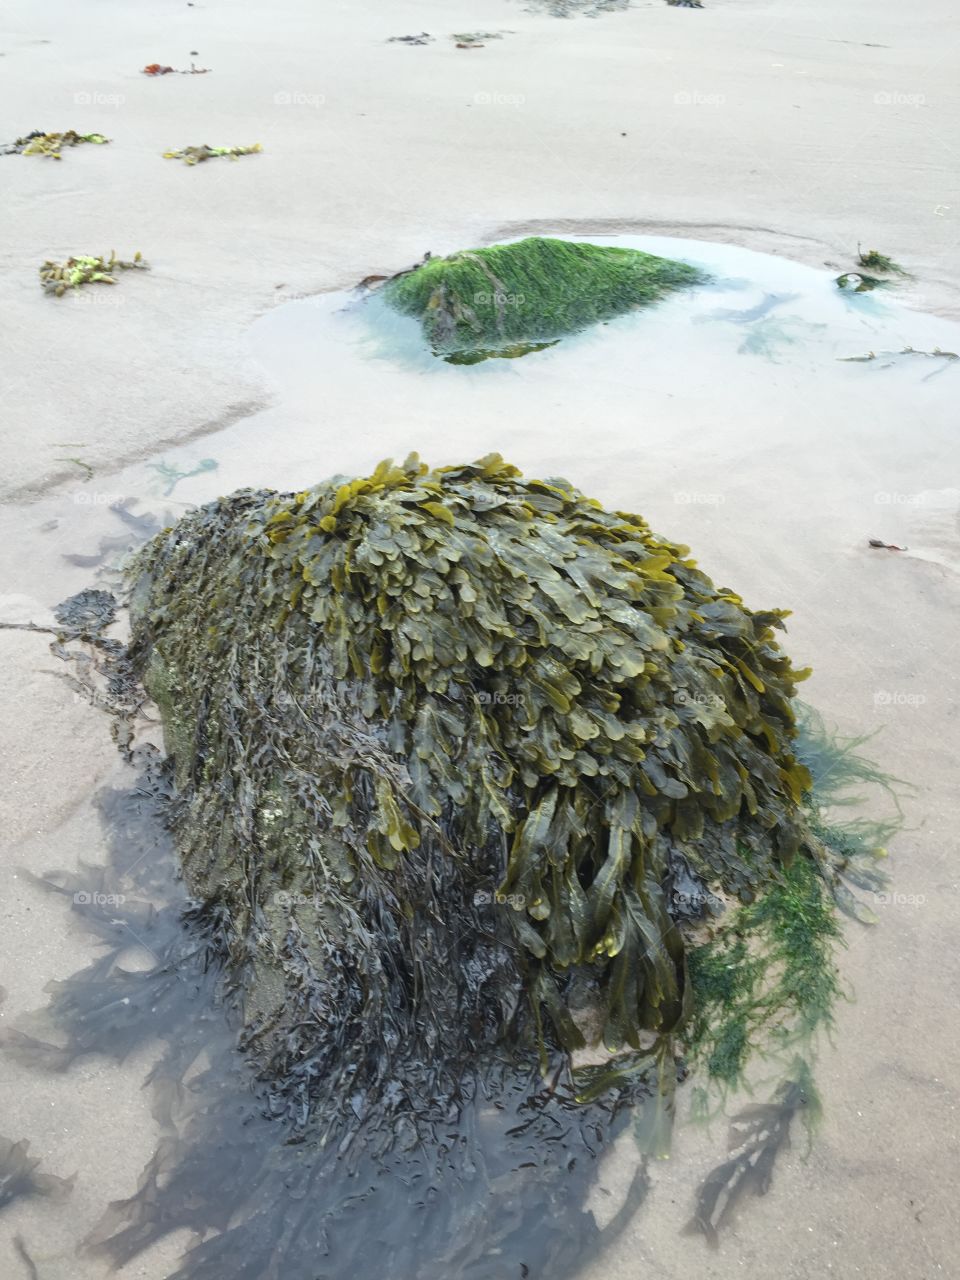 Seaweed on a rock